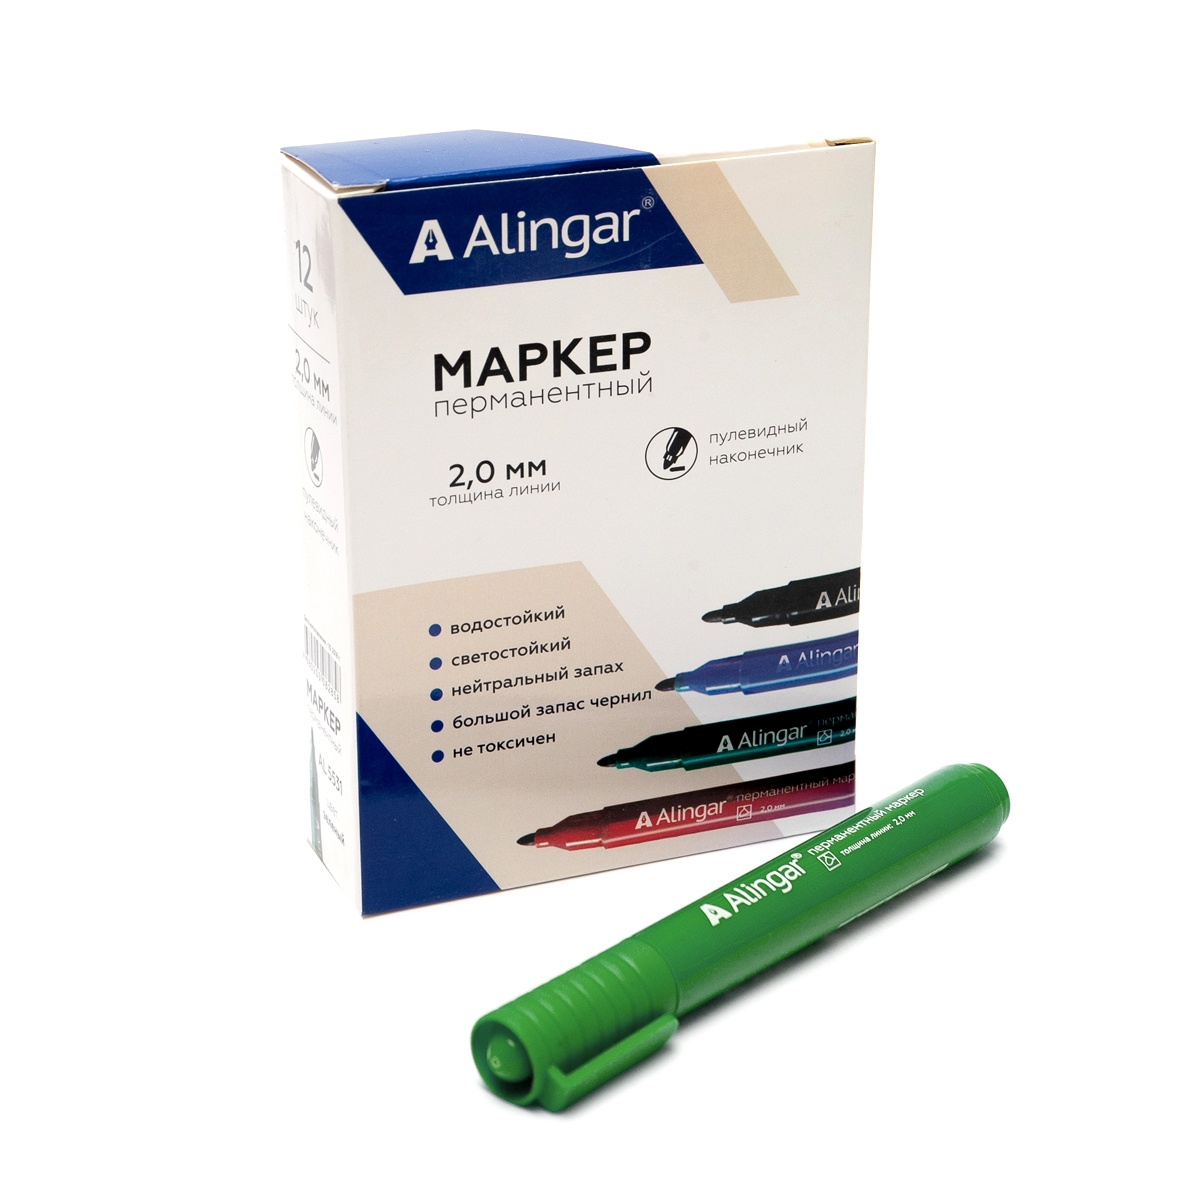 Пернаментный маркер Зеленый AL-5531